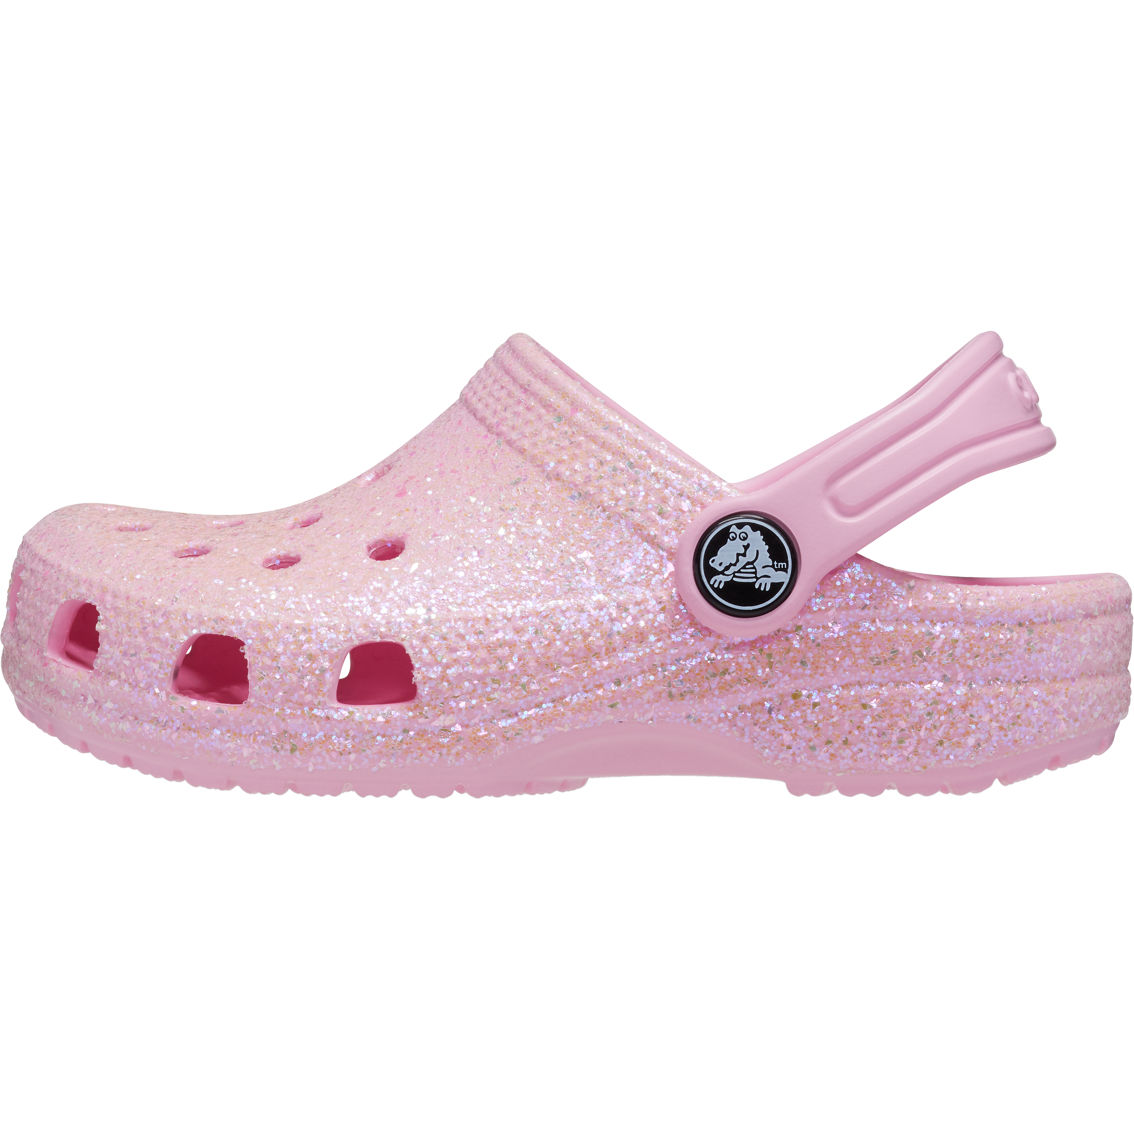 Crocs Toddler Girls Classic Glitter Clogs - Image 3 of 6